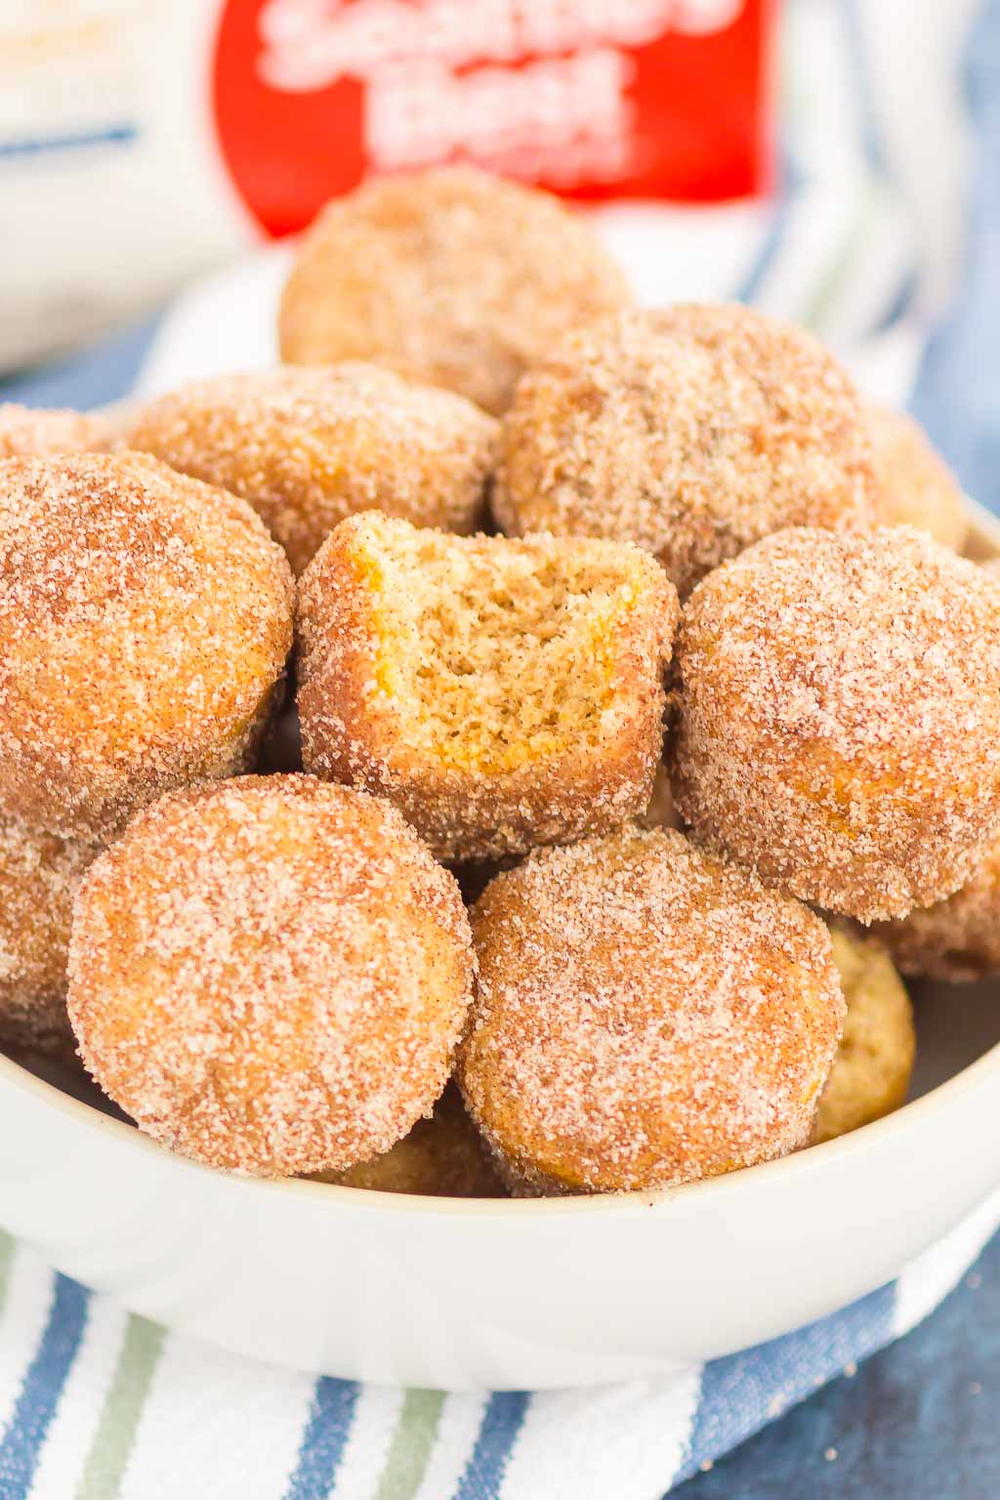 Baked Cinnamon Sugar Donut Holes | FaveSouthernRecipes.com